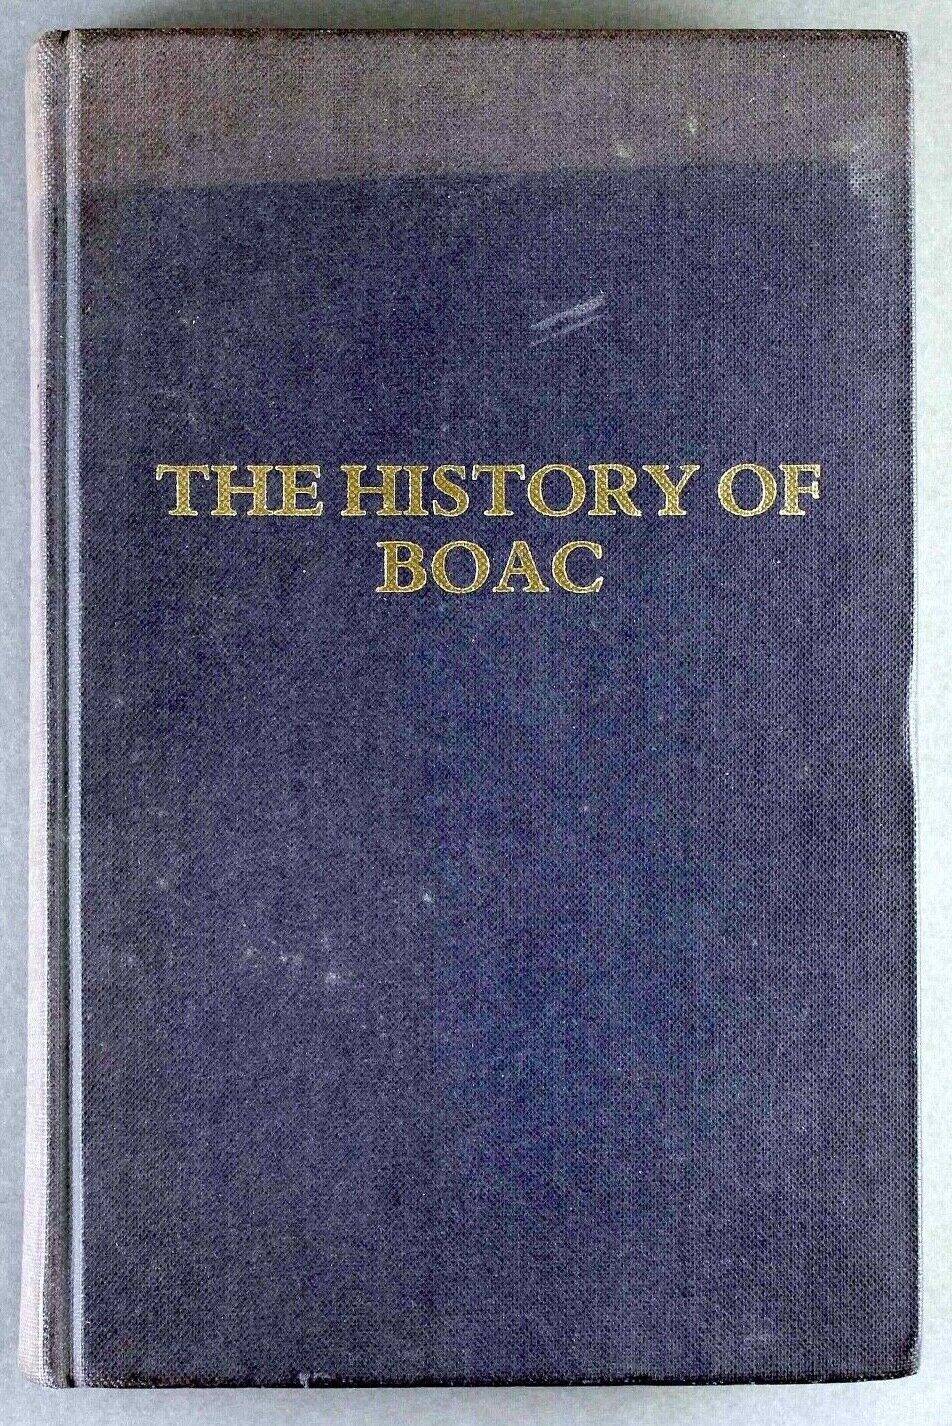 RARE BOAC BOOK THE HISTORY OF BOAC 1939-1974 WESSEX PRESS WINSTON BRAY B.O.A.C. 